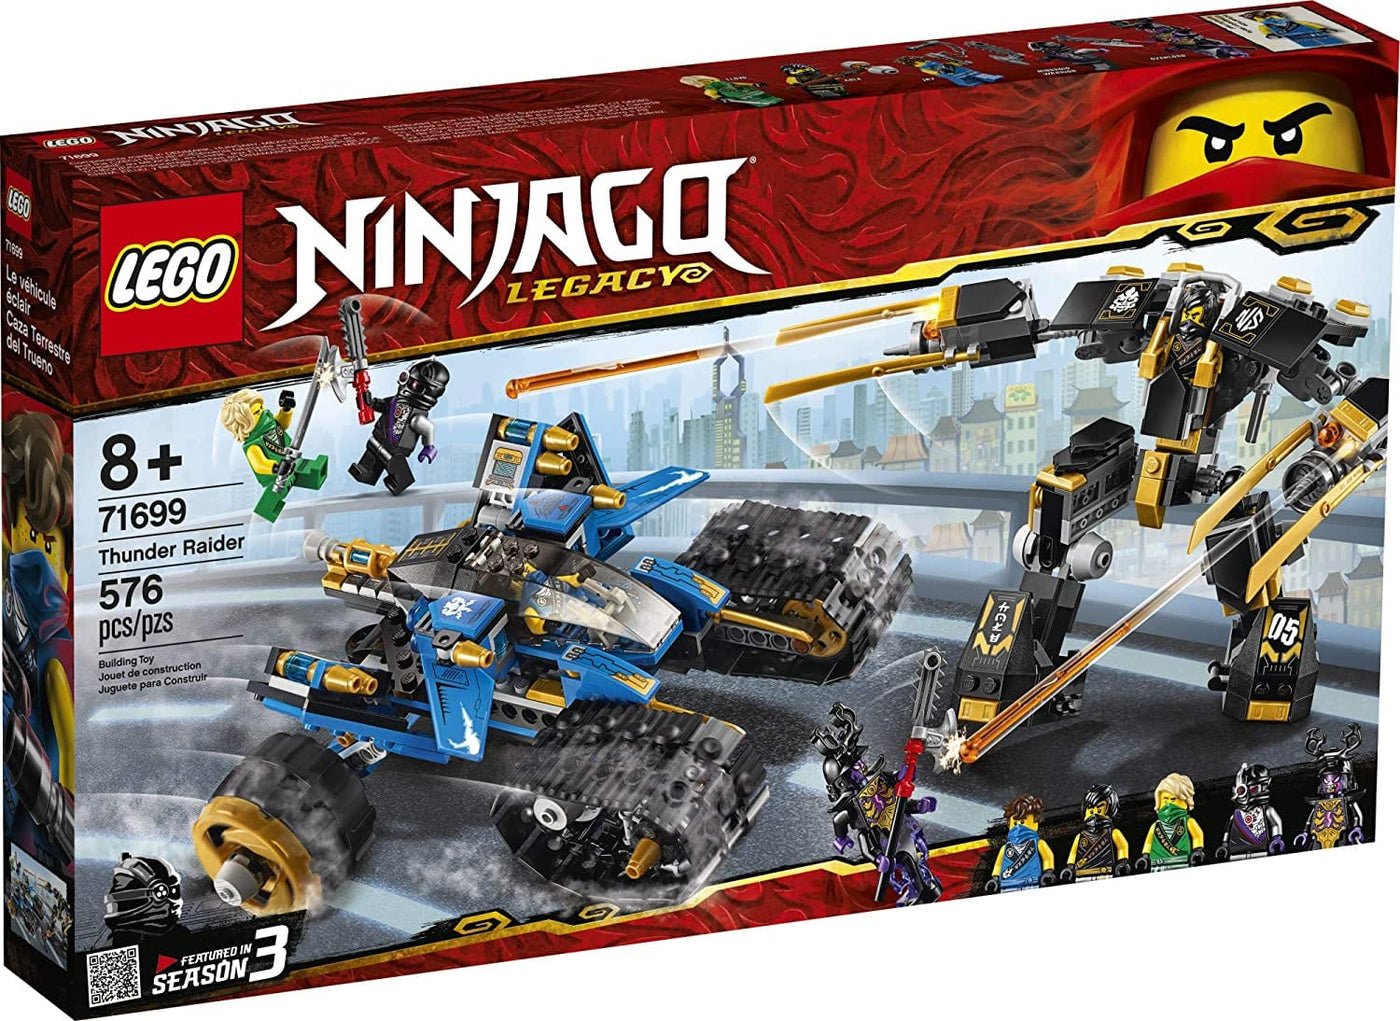 LEGO NINJAGO Legacy Thunder Raider, 71699 by LEGO, Denmark Toy